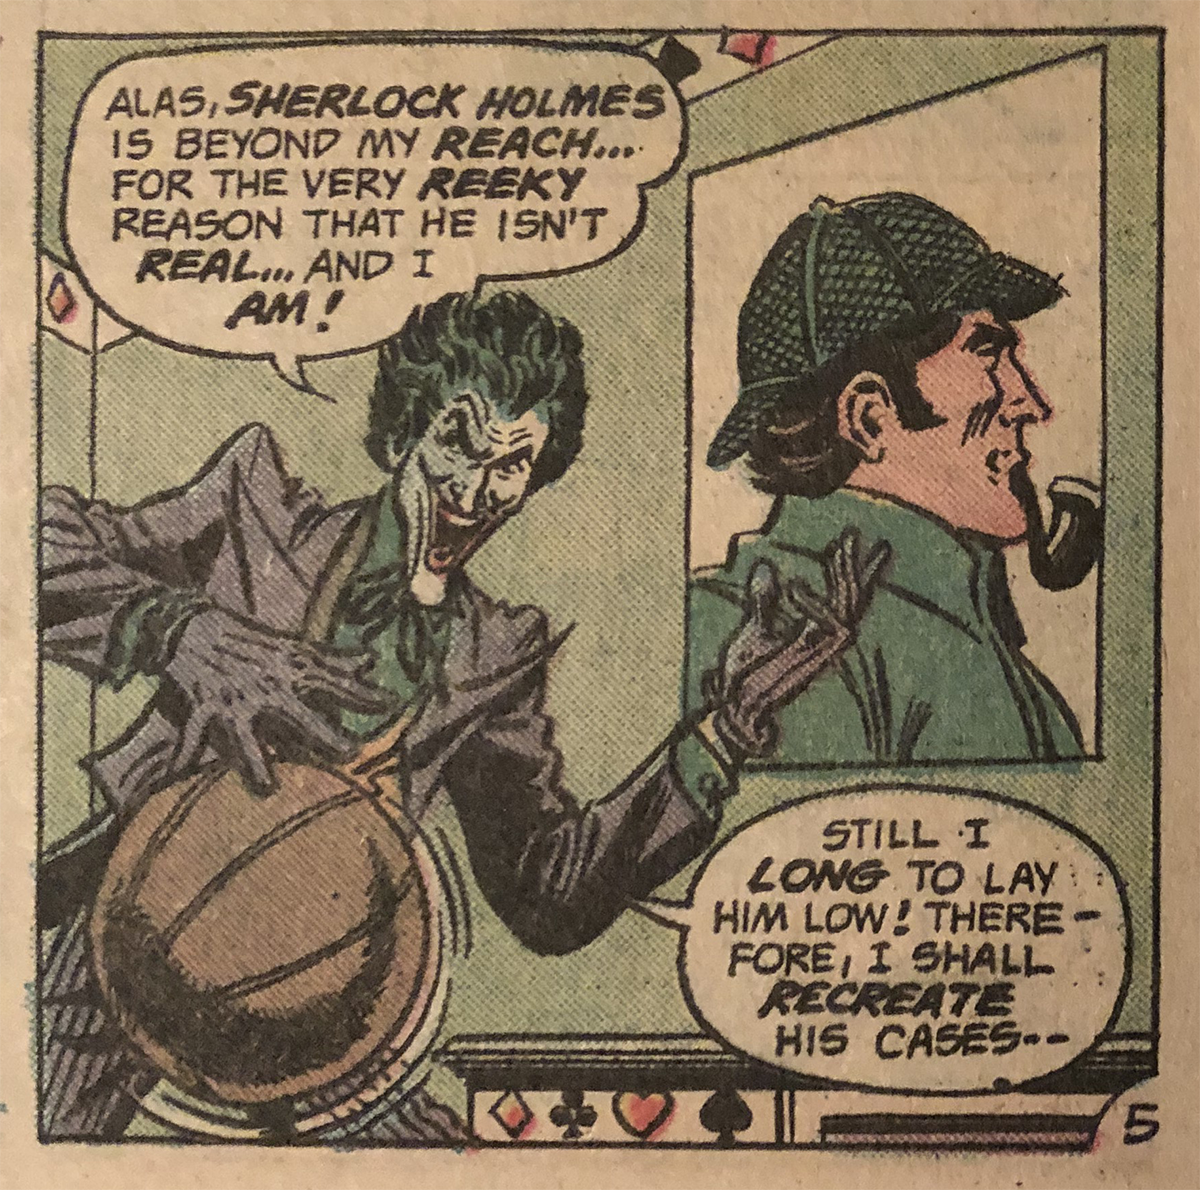 Sherlock Peoria: Sherlock Holmes versus the Joker